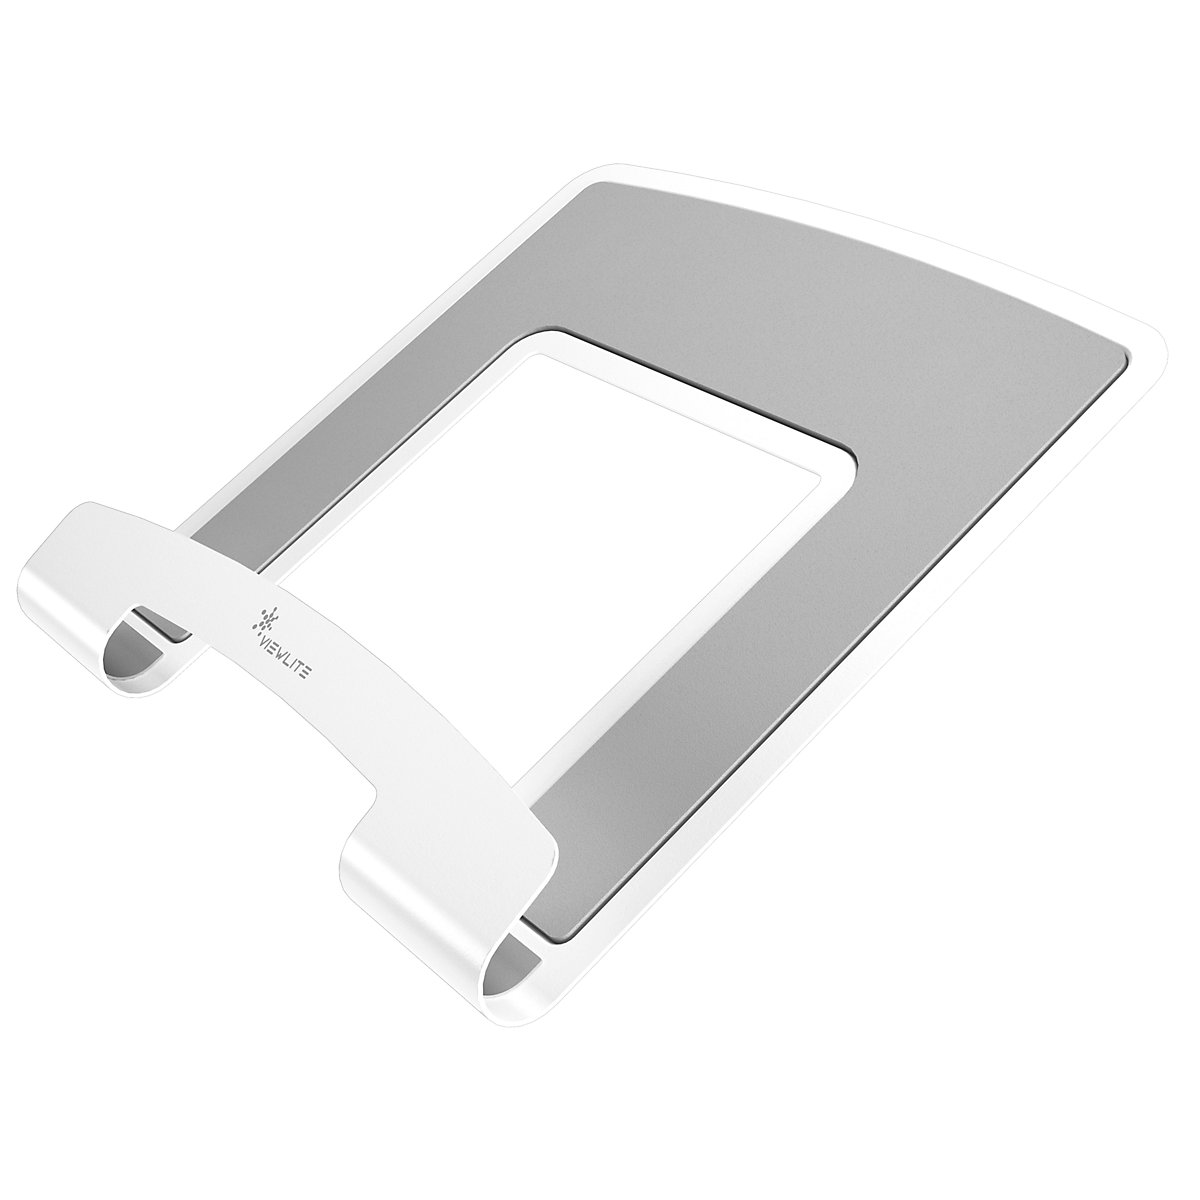 Support pour Notebook VIEWLITE – Dataflex, l x h 300 x 300 mm, blanc